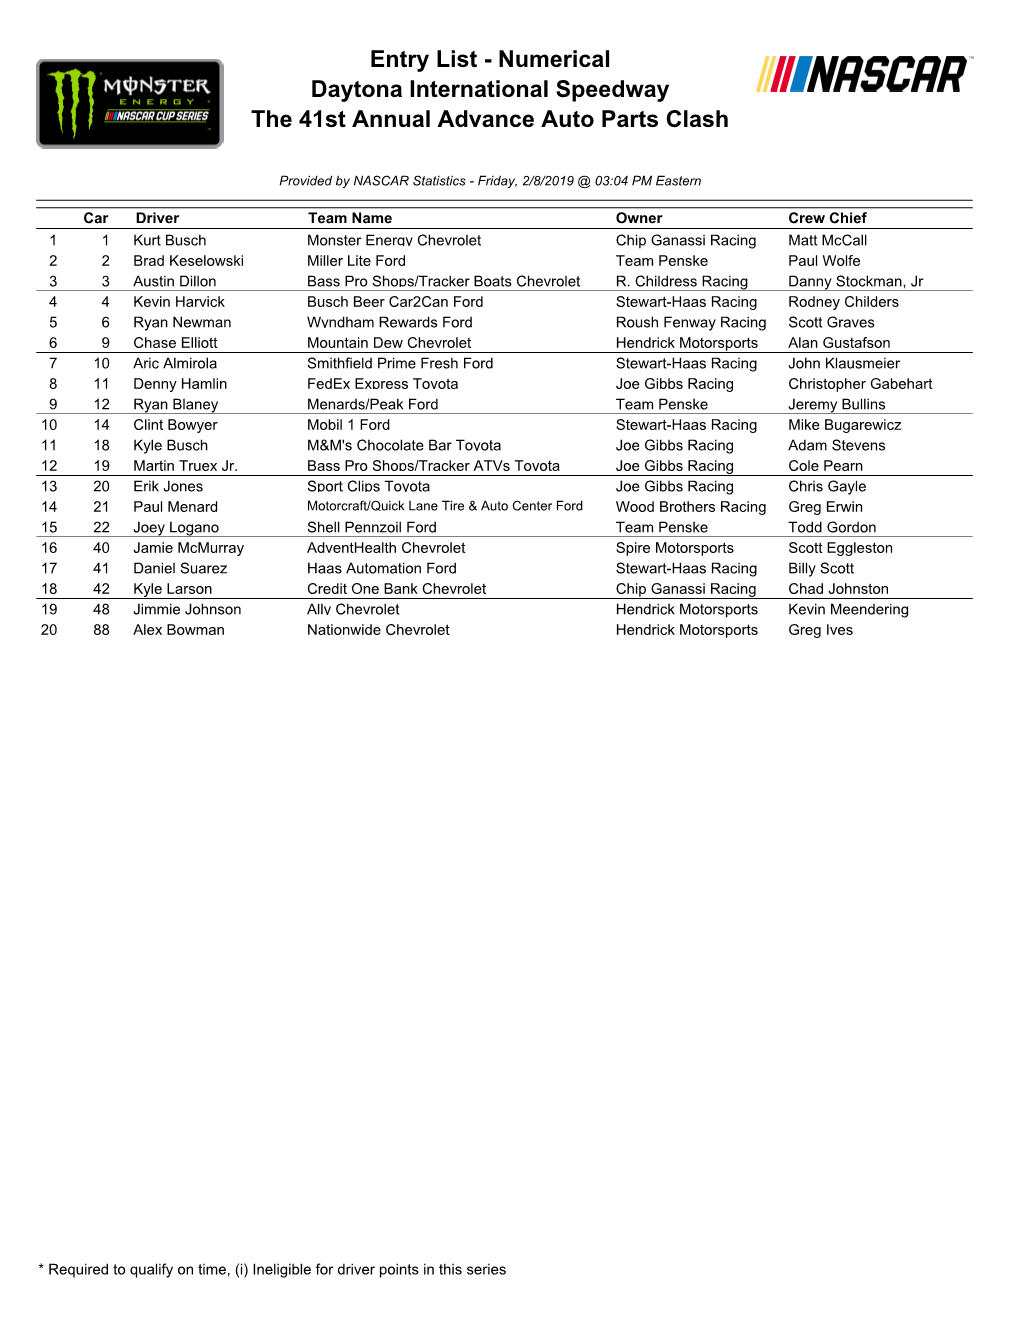 Entry List - Numerical Daytona International Speedway the 41St Annual Advance Auto Parts Clash